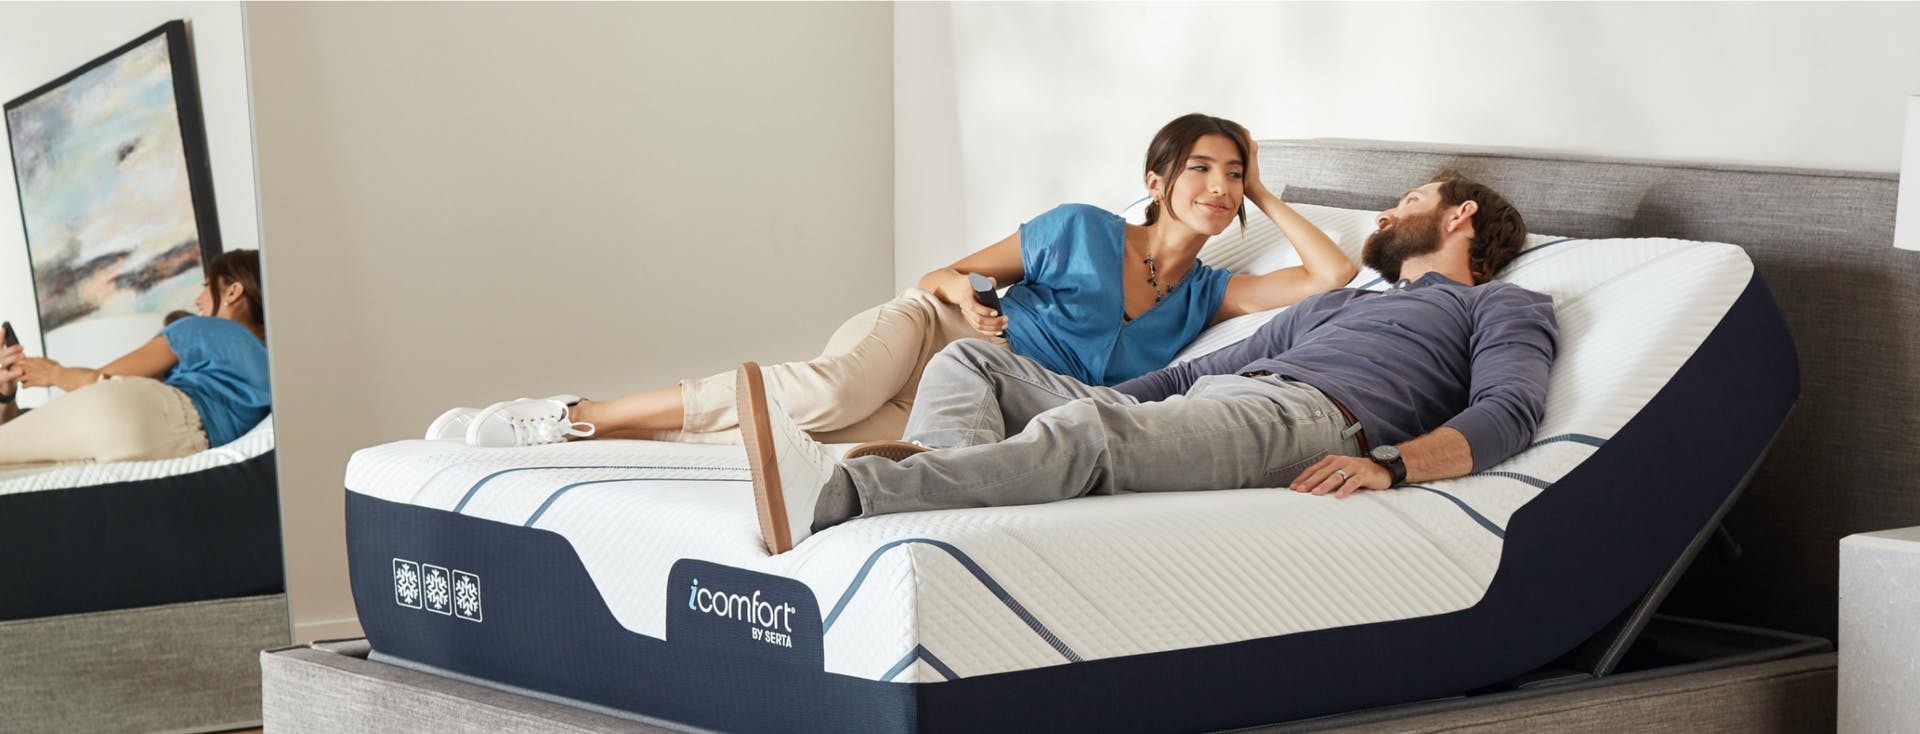 couple laying on adjustable mattress